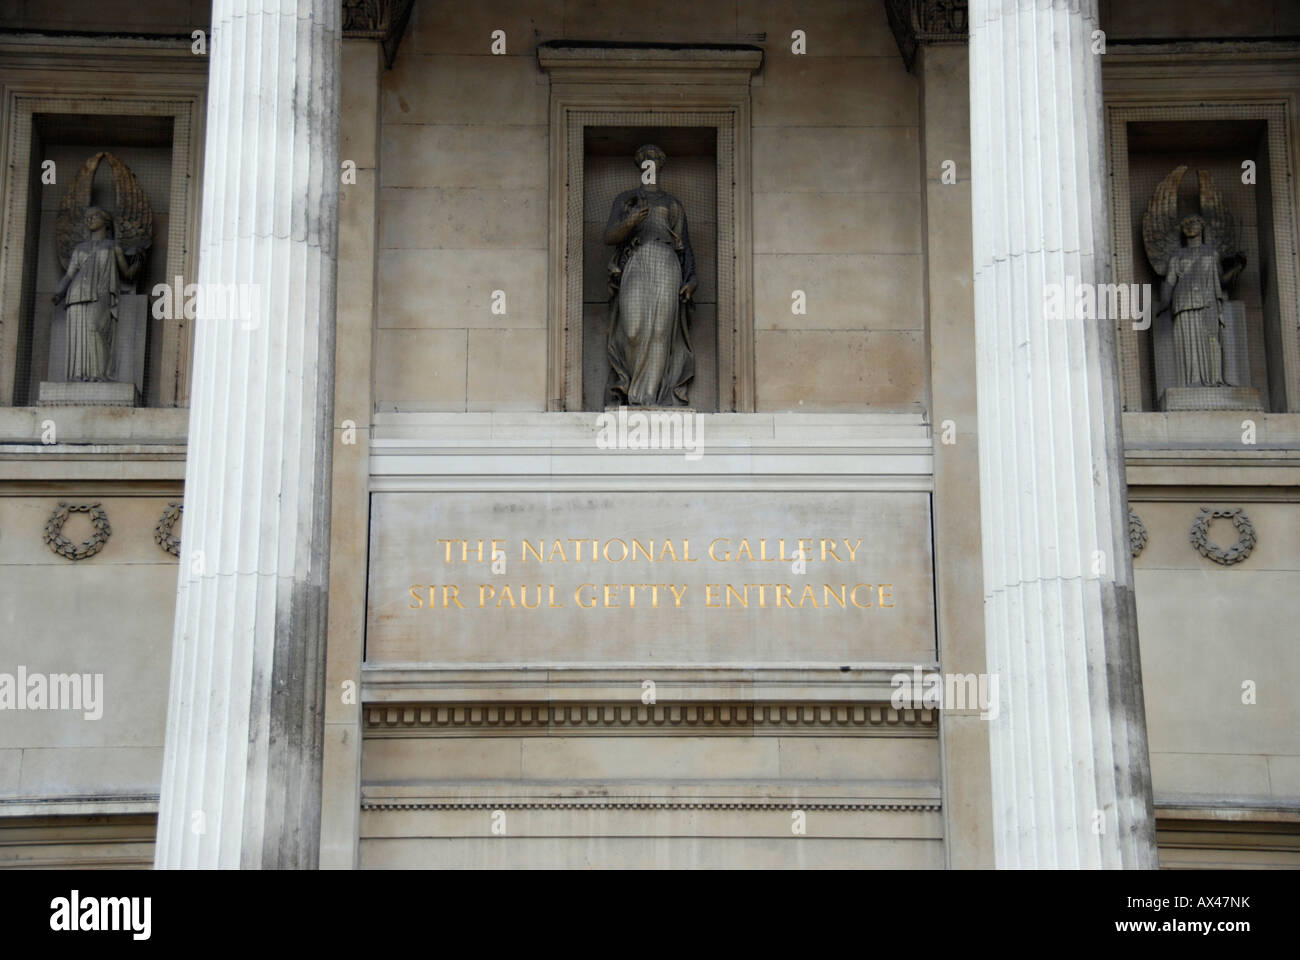 La National Gallery, Sir Paul Getty Entrée, Trafalgar Square, Londres Banque D'Images